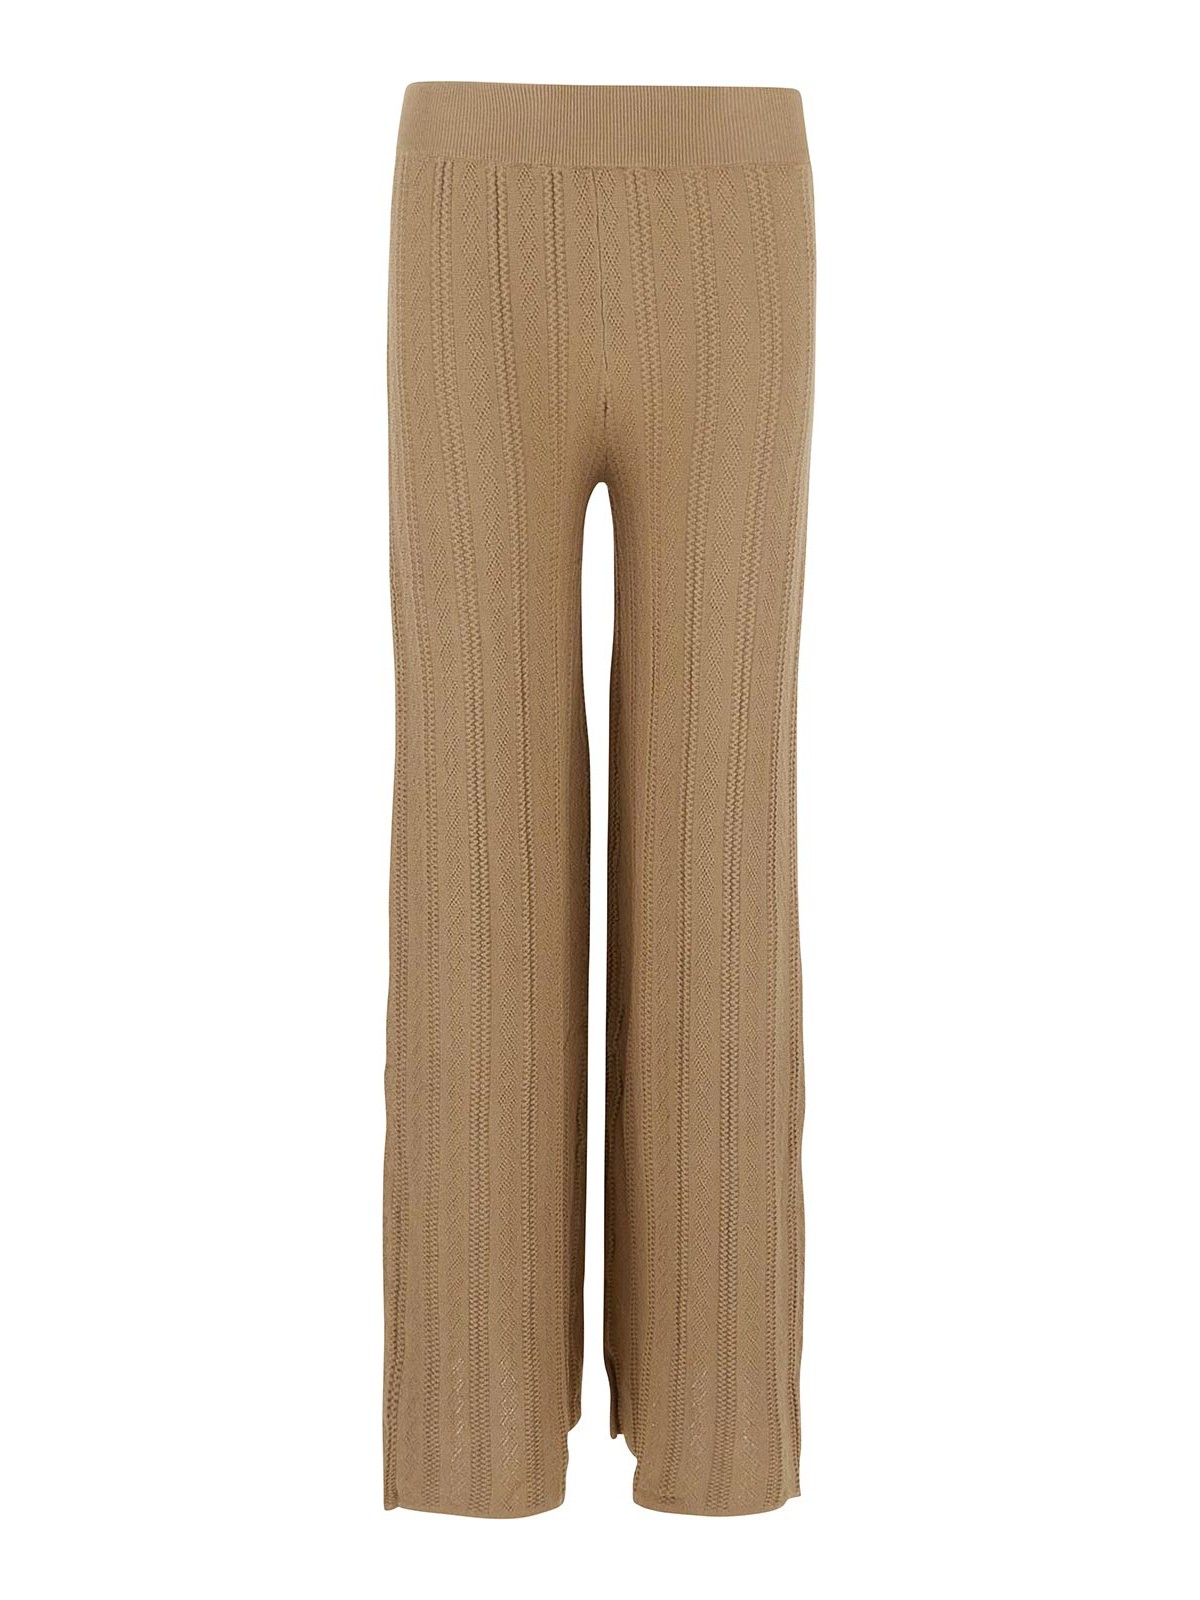 Remain Birger Christensen Beige Trousers With Elasticated Waist